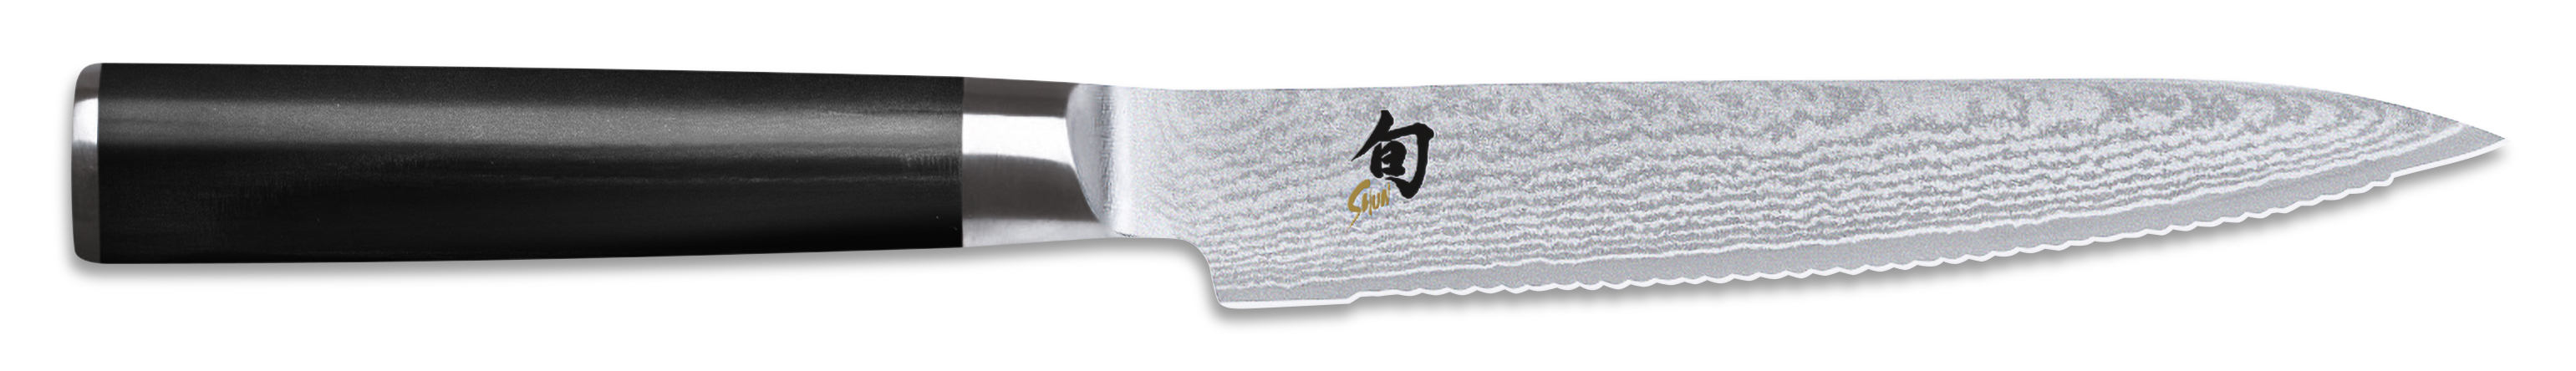 KAI - DM-0722: SHUN Kochmesser / Cook Knife To mato Knife 6,0 (15,0 cm)  